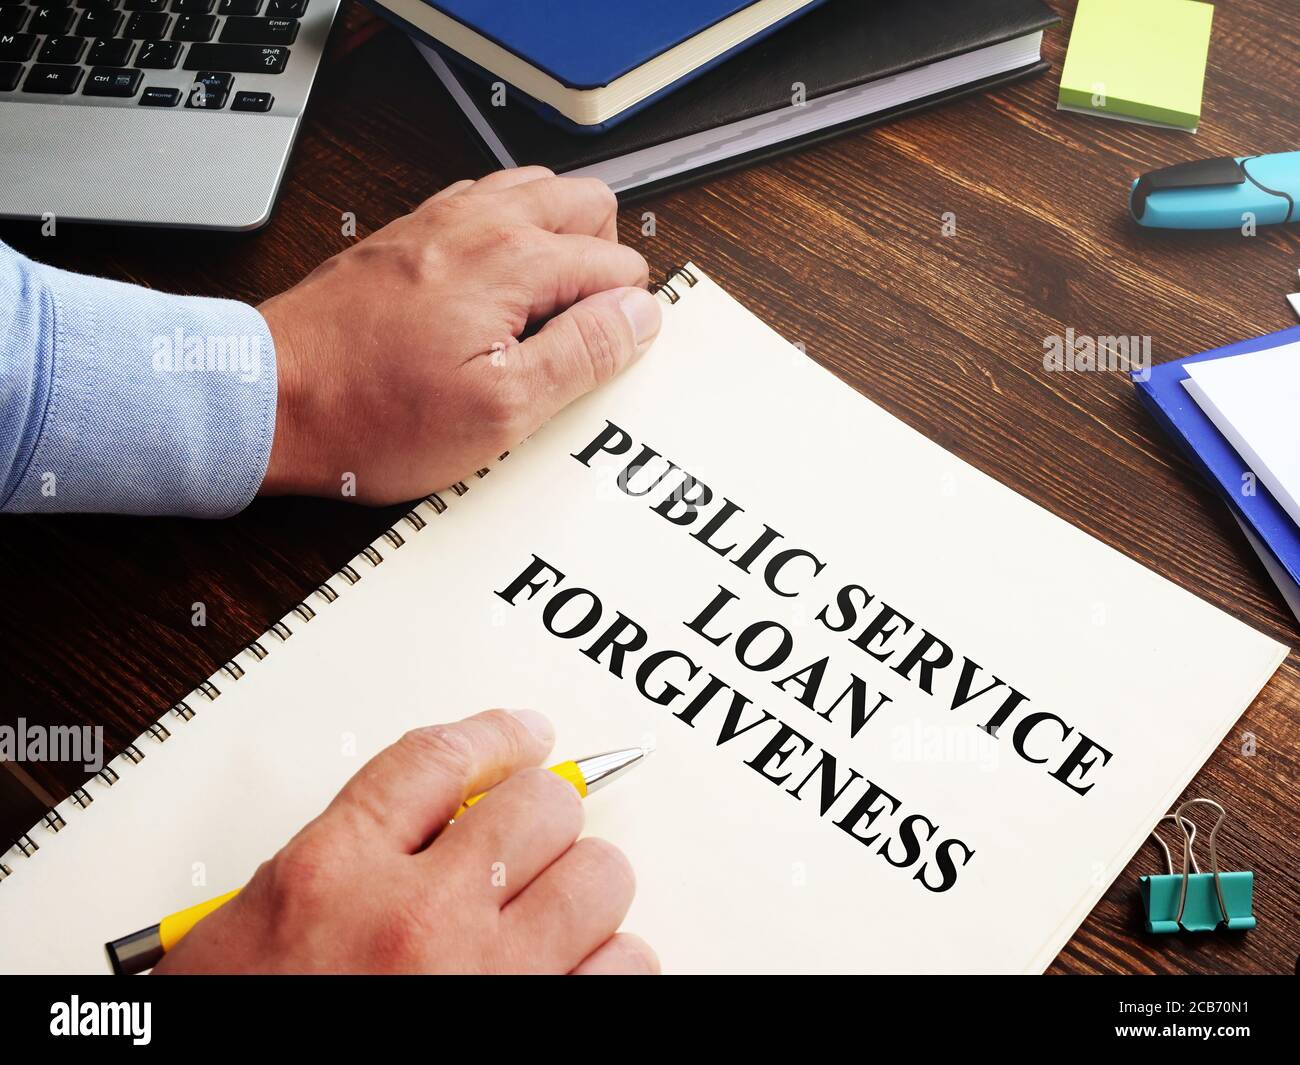 Public service loan forgiveness program PSLF. Stock Photo